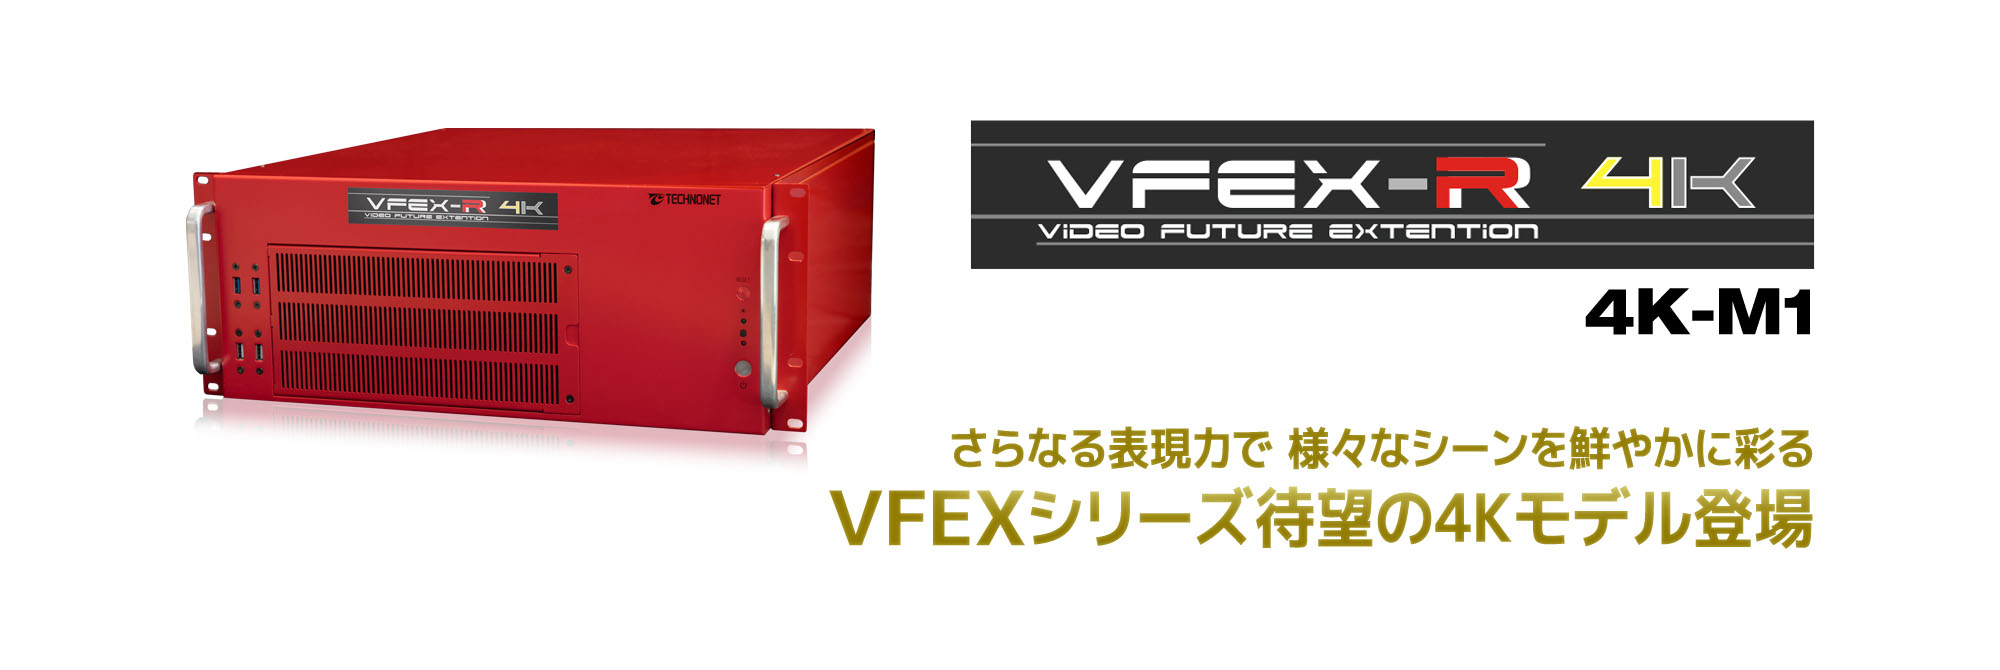 VFEX-R(HD-M4)製品画像